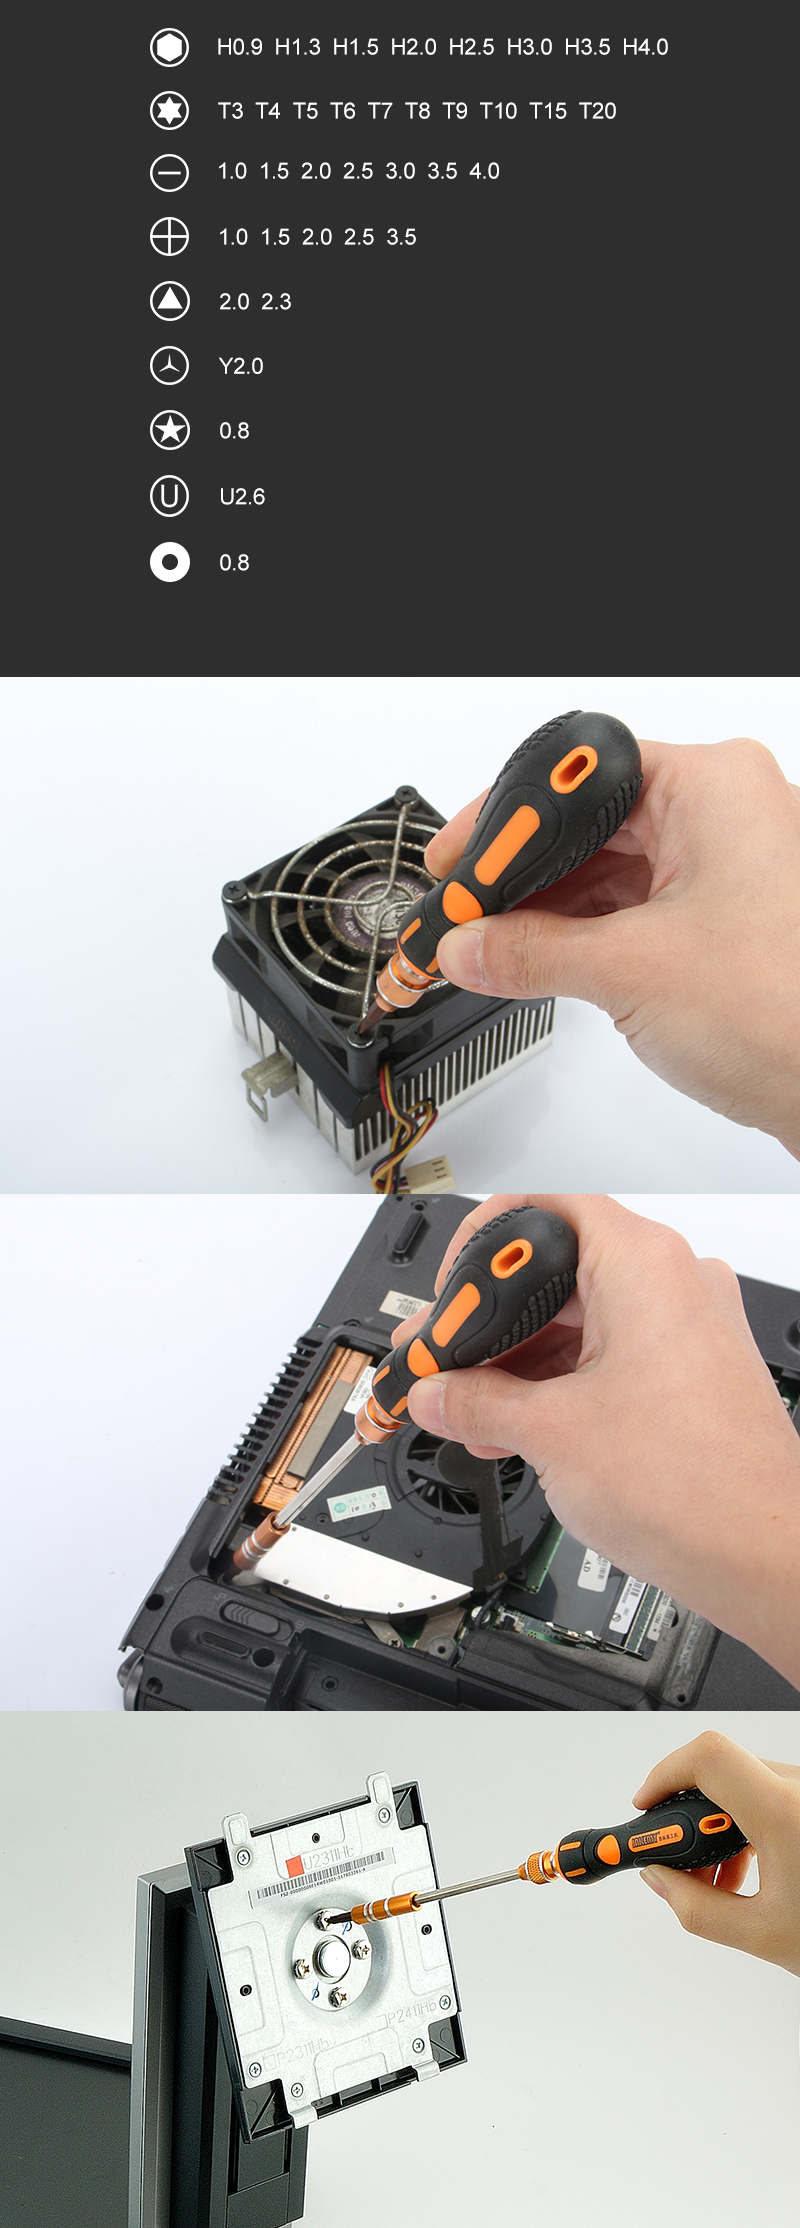 micro screwdriver set for computer